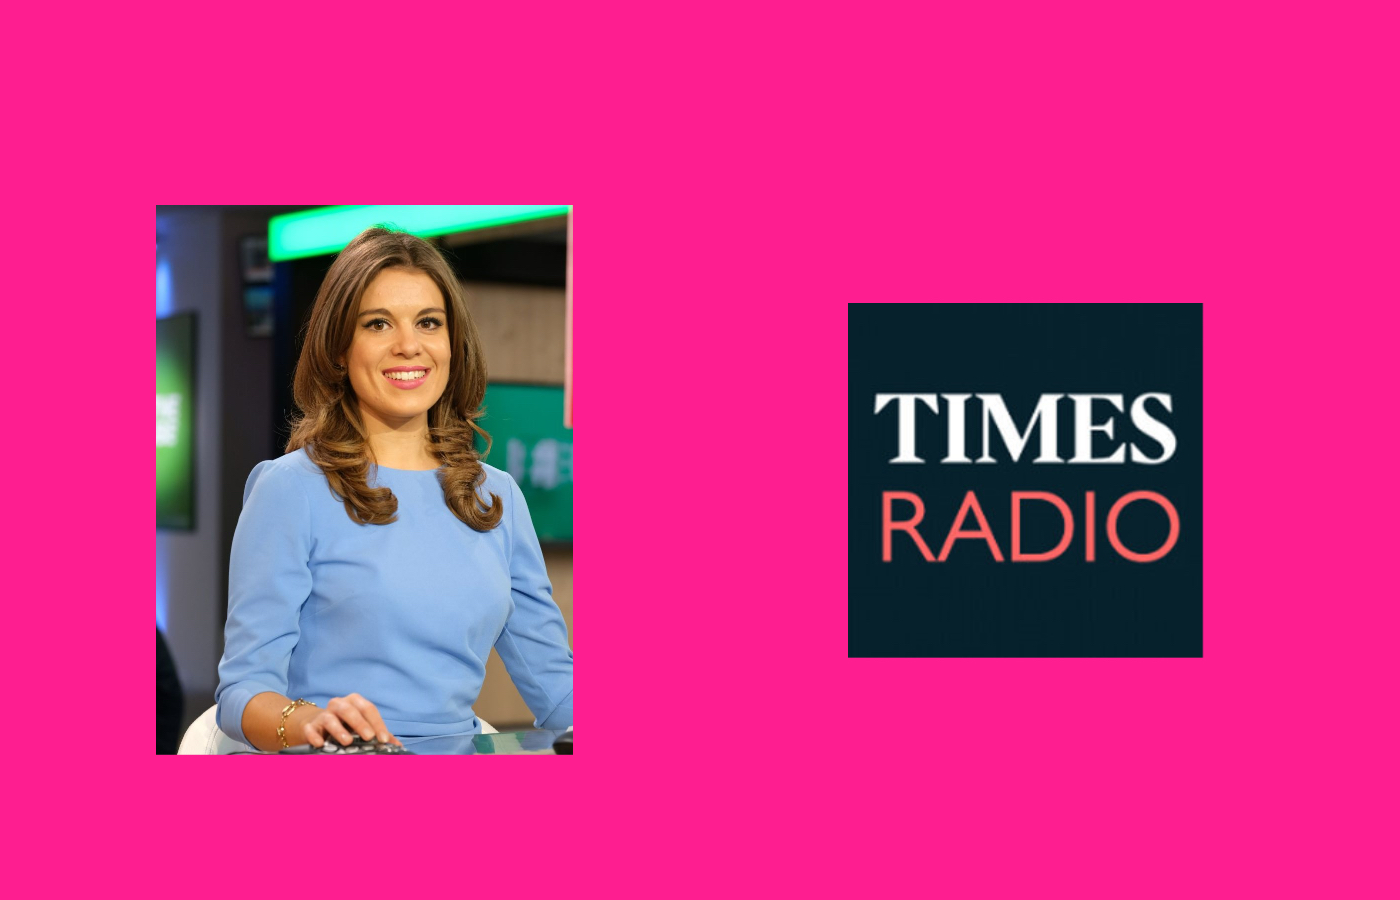 Times Radio presenter Rosie Wright